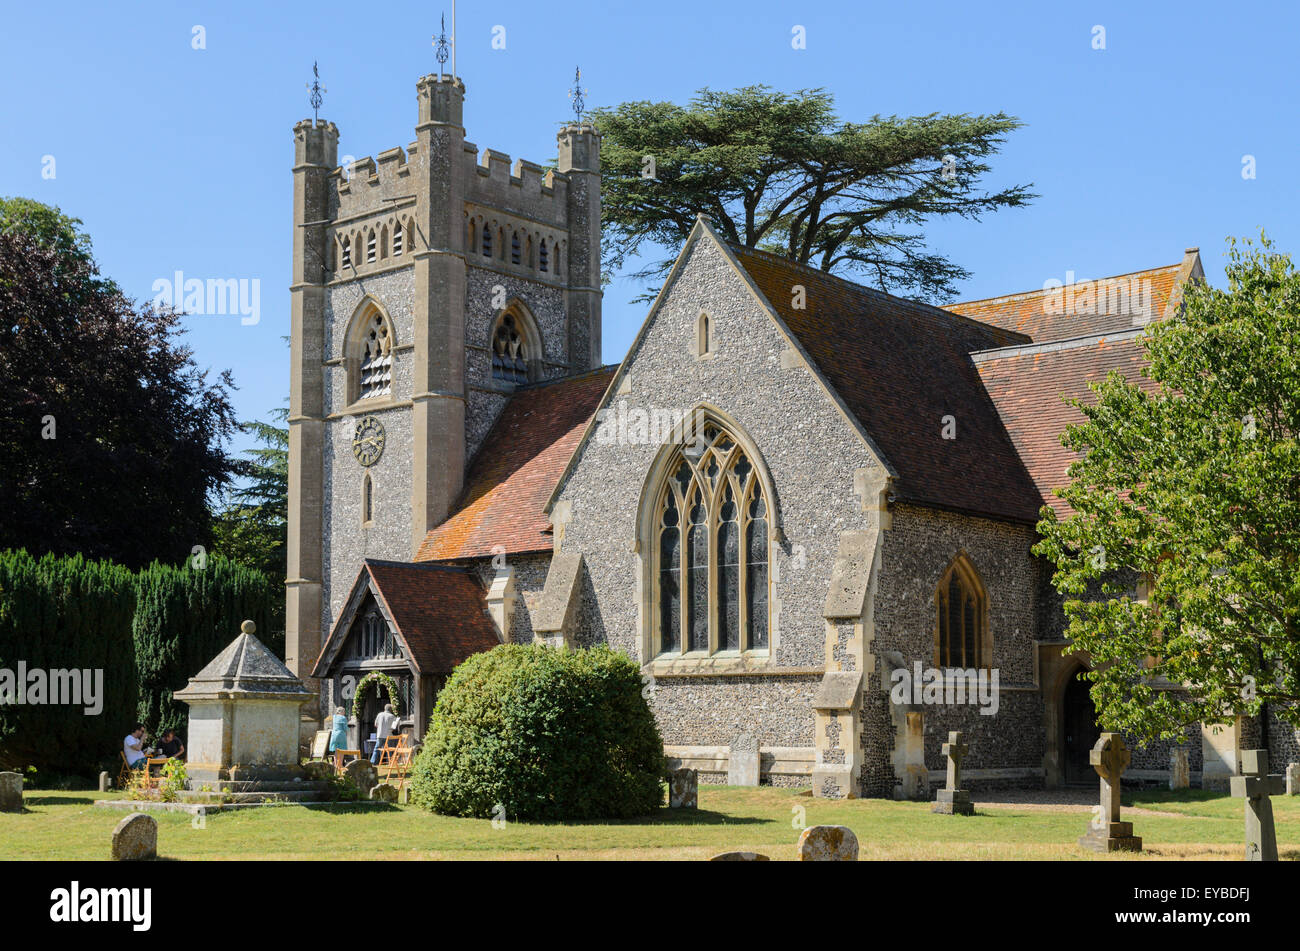 St Mary the Virgin Church, Hambleden, Buckinghamshire, England, UK. Stock Photo